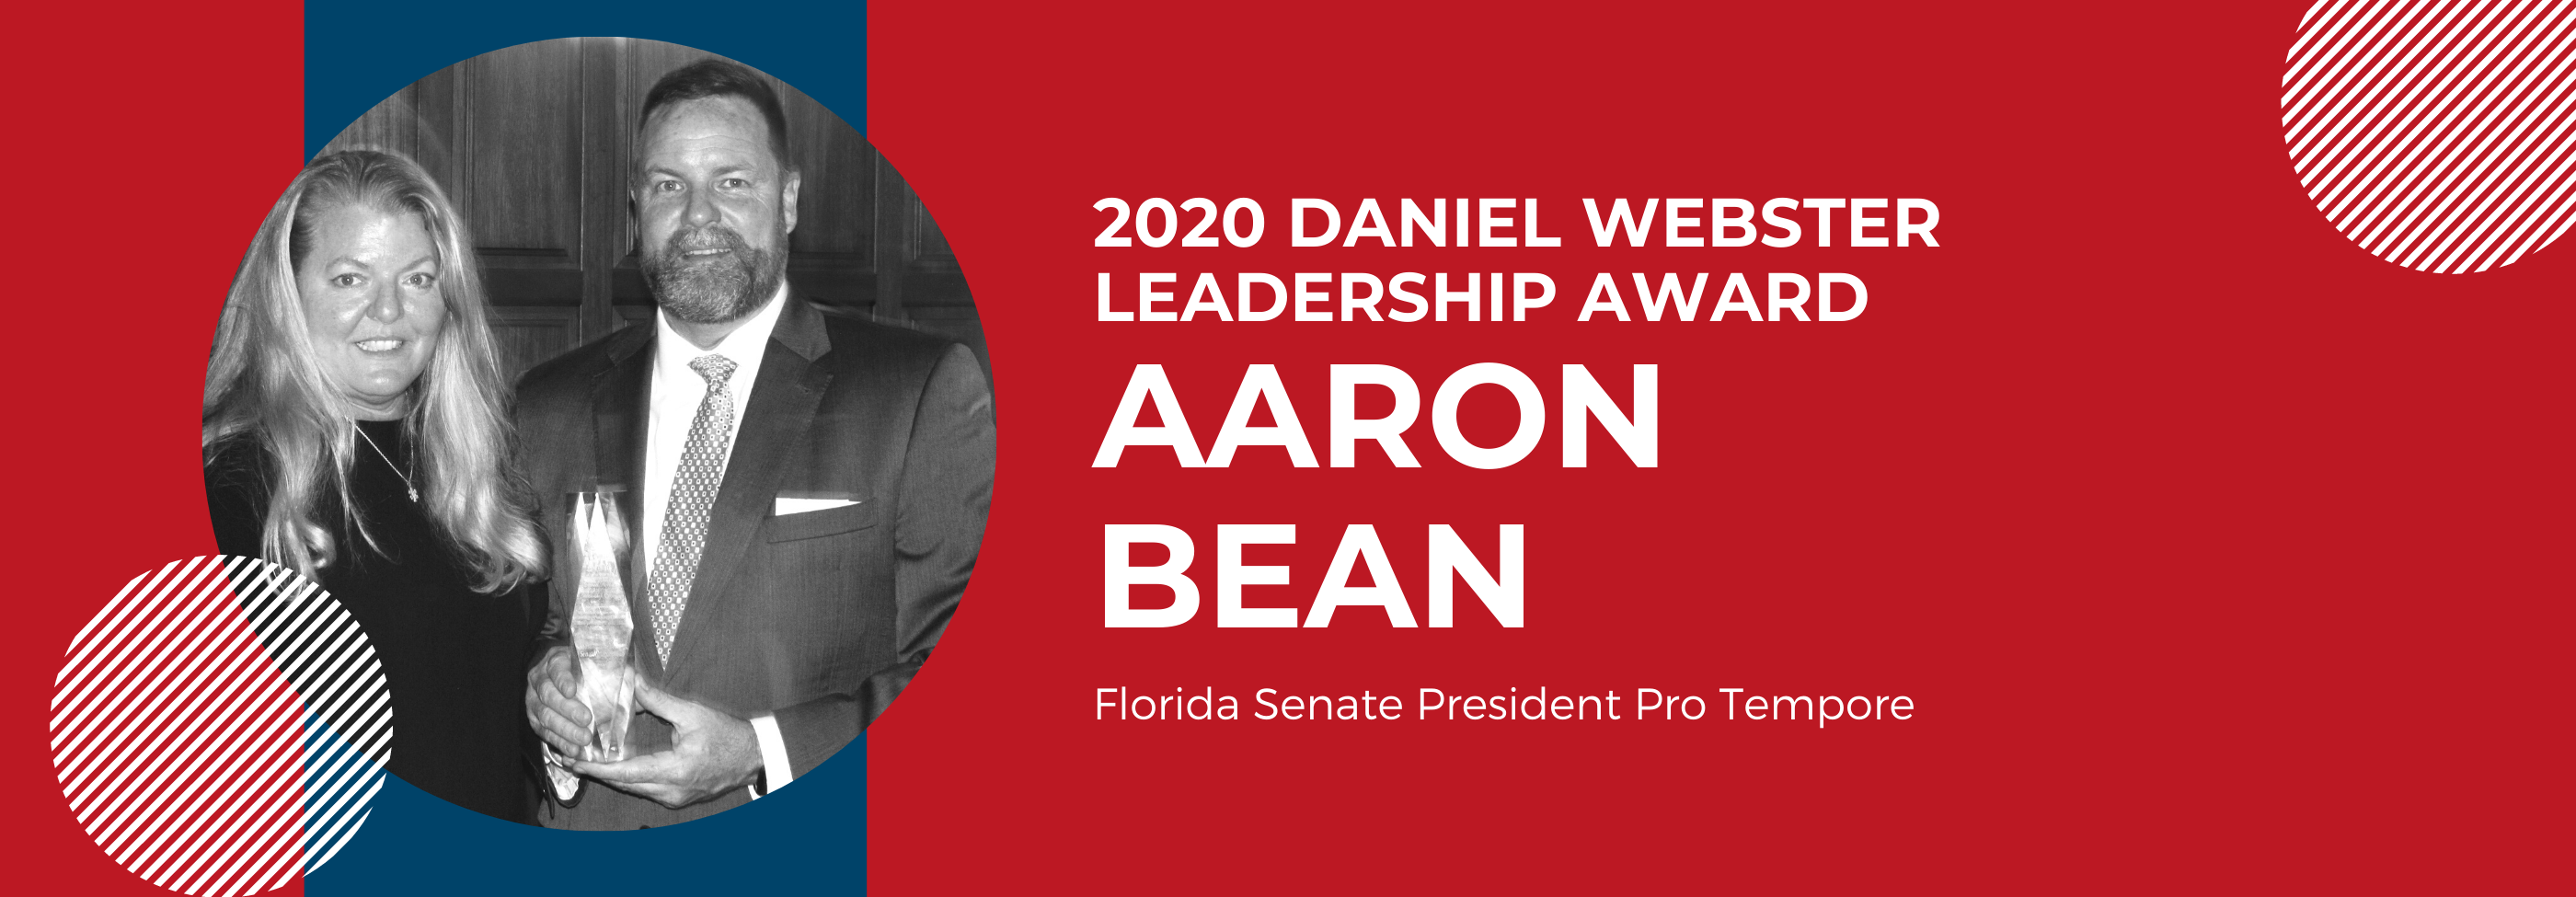 Florida Senate President Pro Tempore Aaron Bean Accepts the 2020 Daniel Webster Leadership Award